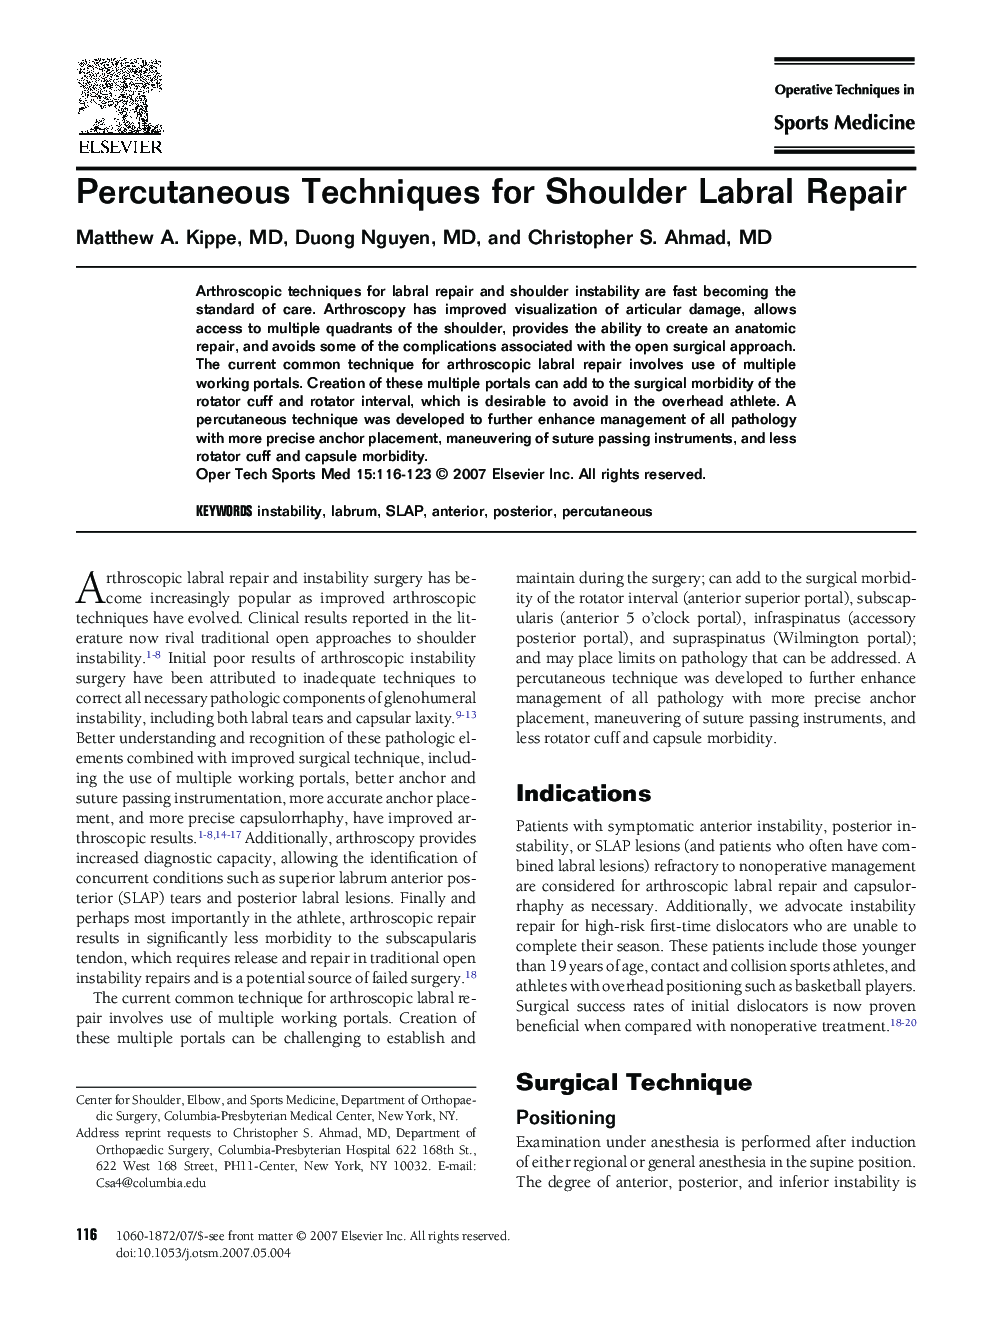 Percutaneous Techniques for Shoulder Labral Repair